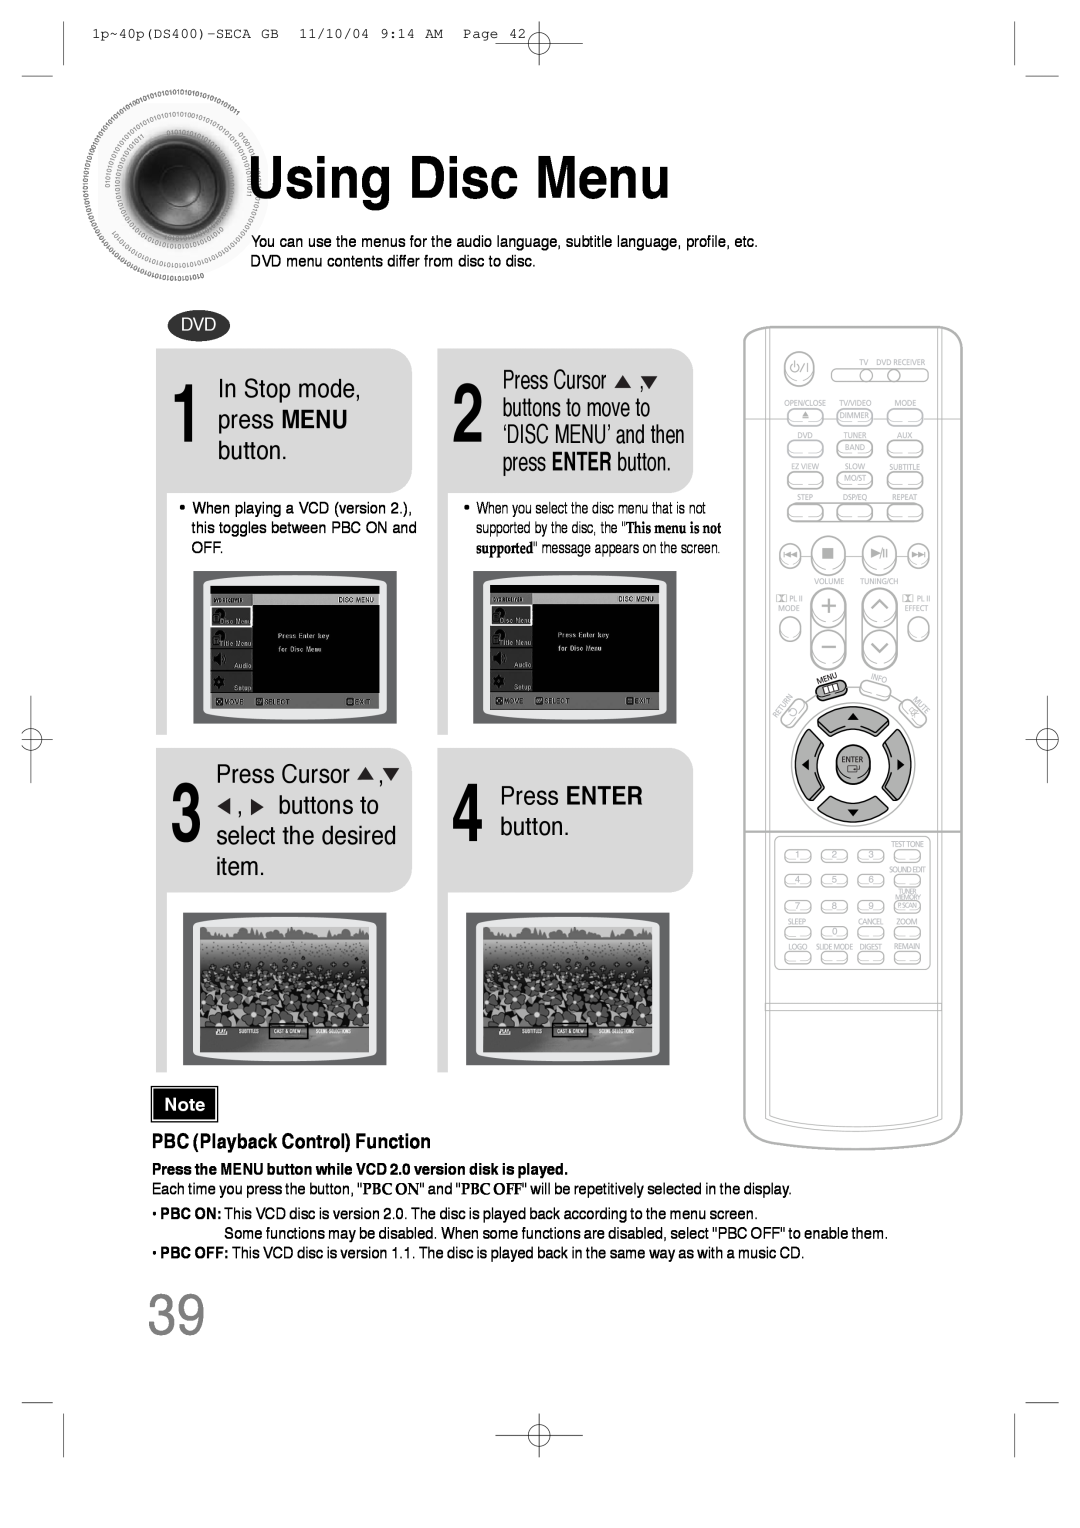 Samsung HT-DS400 instruction manual UsingDisc Menu, In Stop mode, buttons to, item, pressbutton.MENU, Press Cursor 